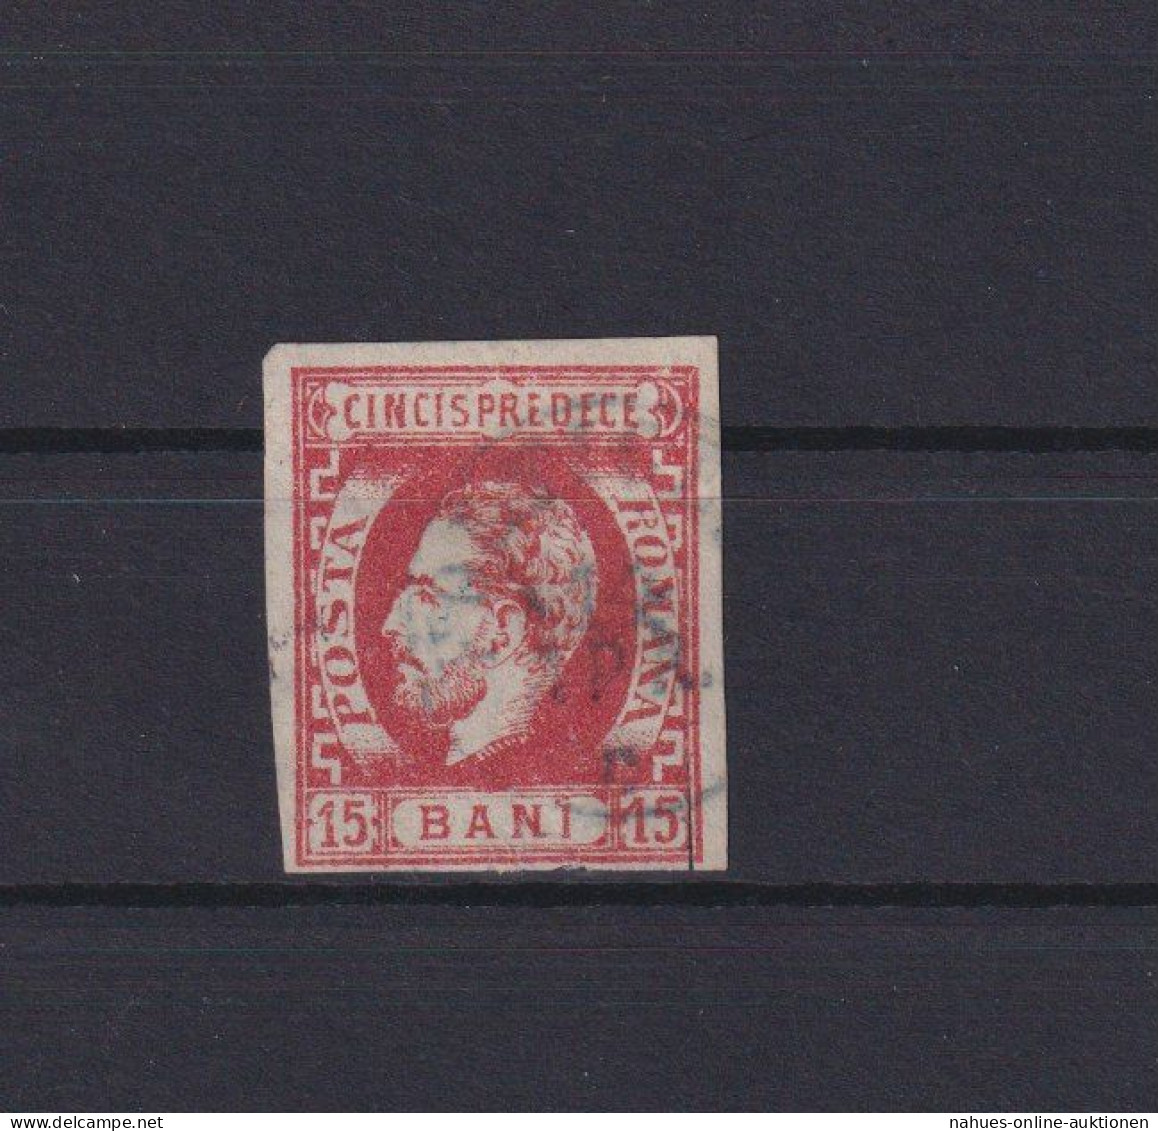 Rumänien Fürst Karl I. 30 15 Bani Rot Gestempelt Kat. 250,00 Ausgabe 1871 - Covers & Documents